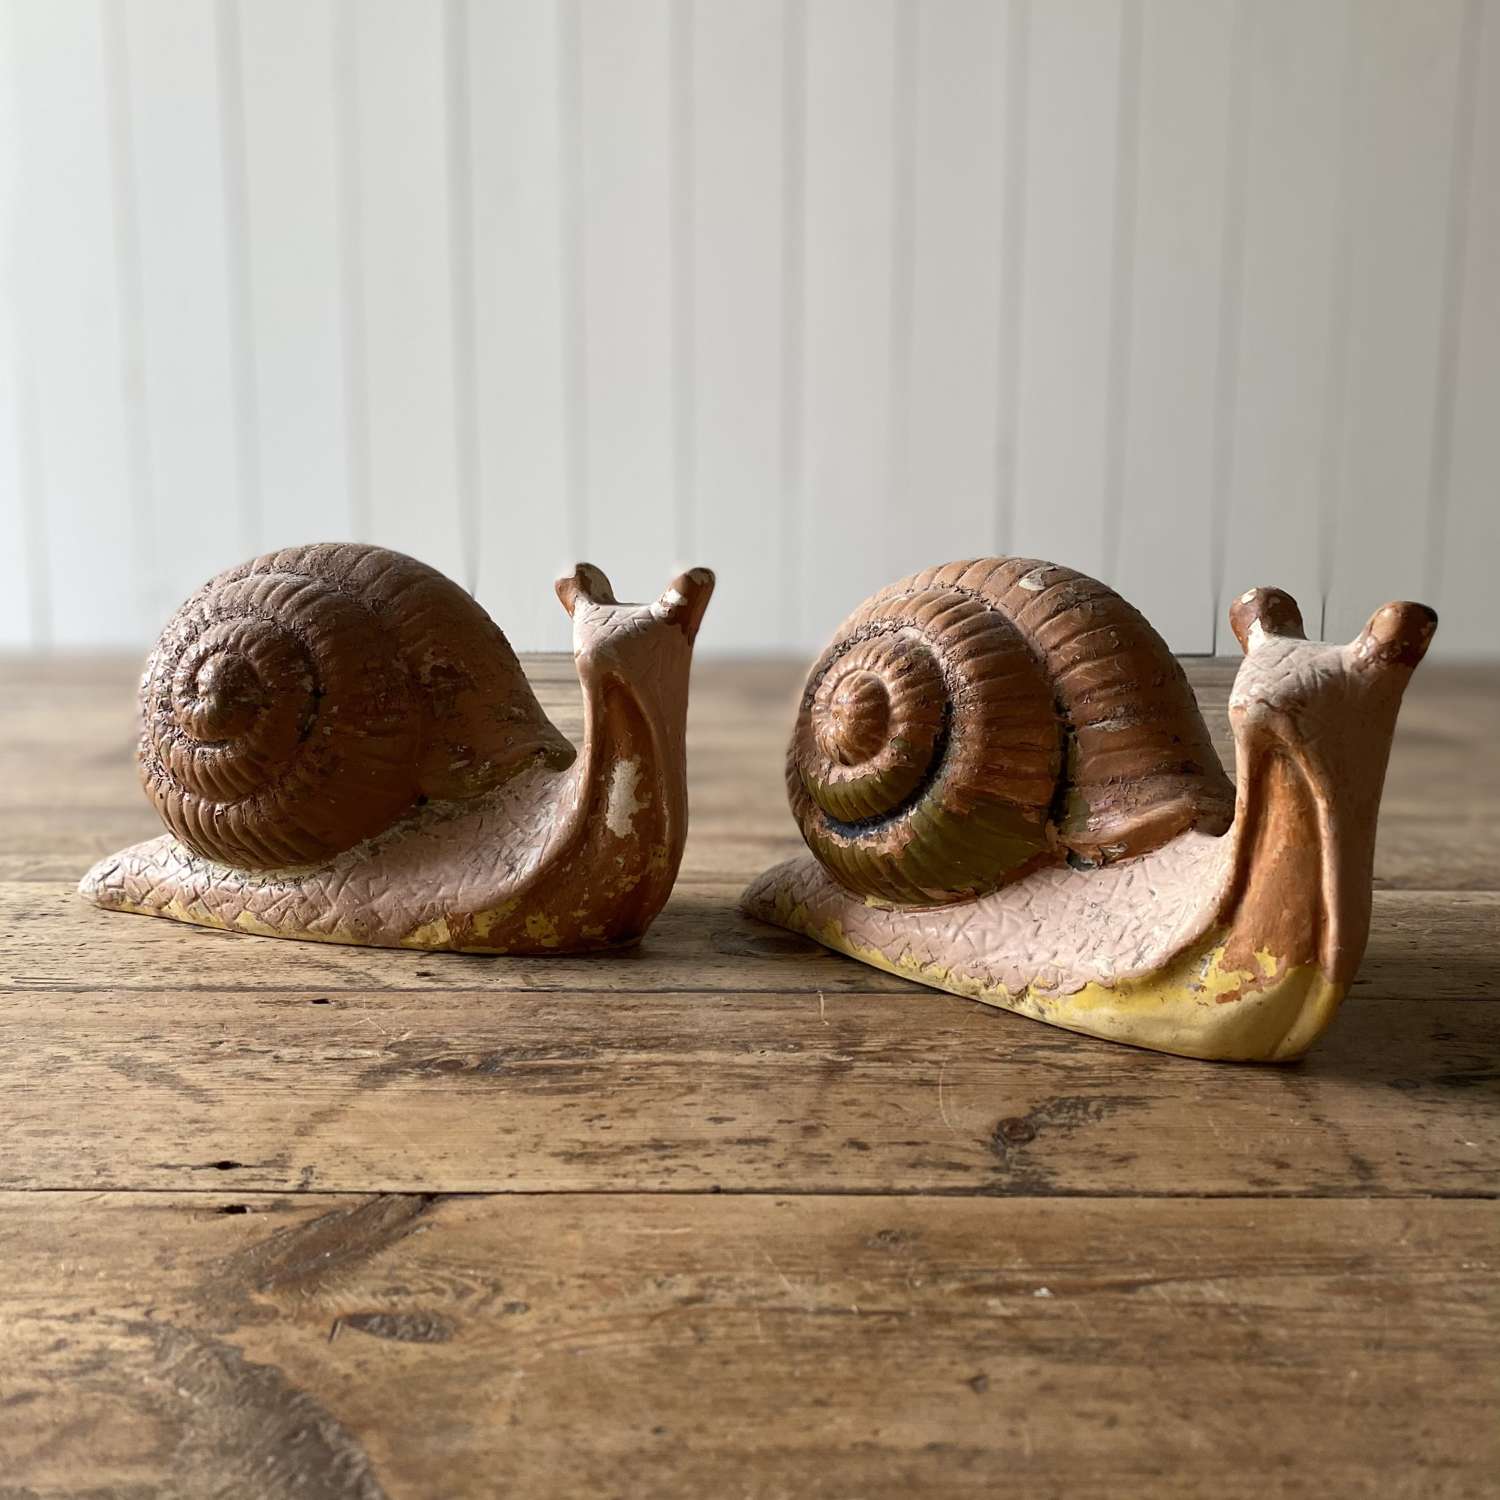 Weathered ceramic snails